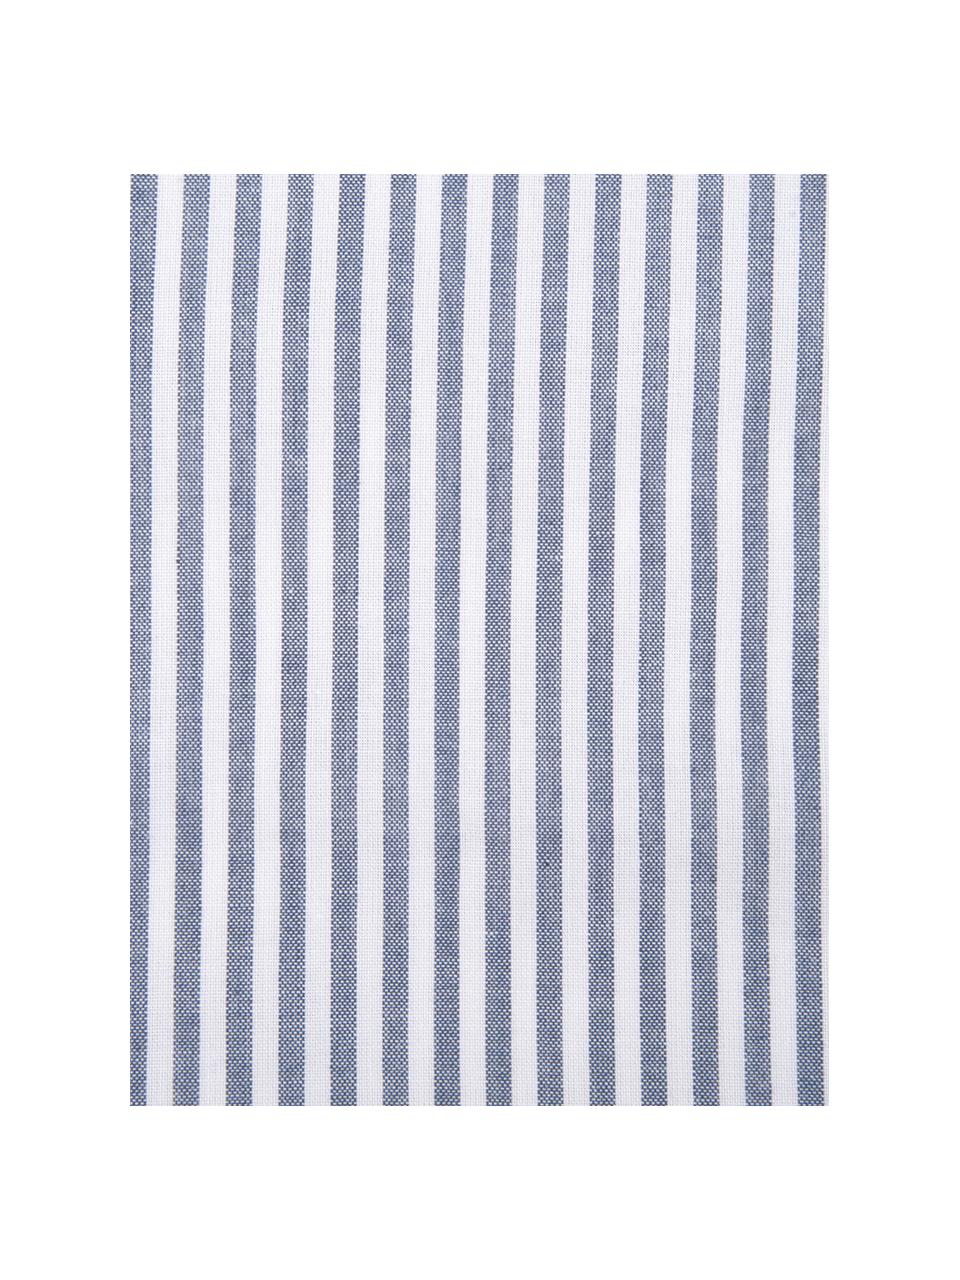 Parure copripiumino in cotone ranforce Ellie, Tessuto: Renforcé, Bianco, blu scuro, 200 x 200 cm + 2 federe 50 x 80 cm